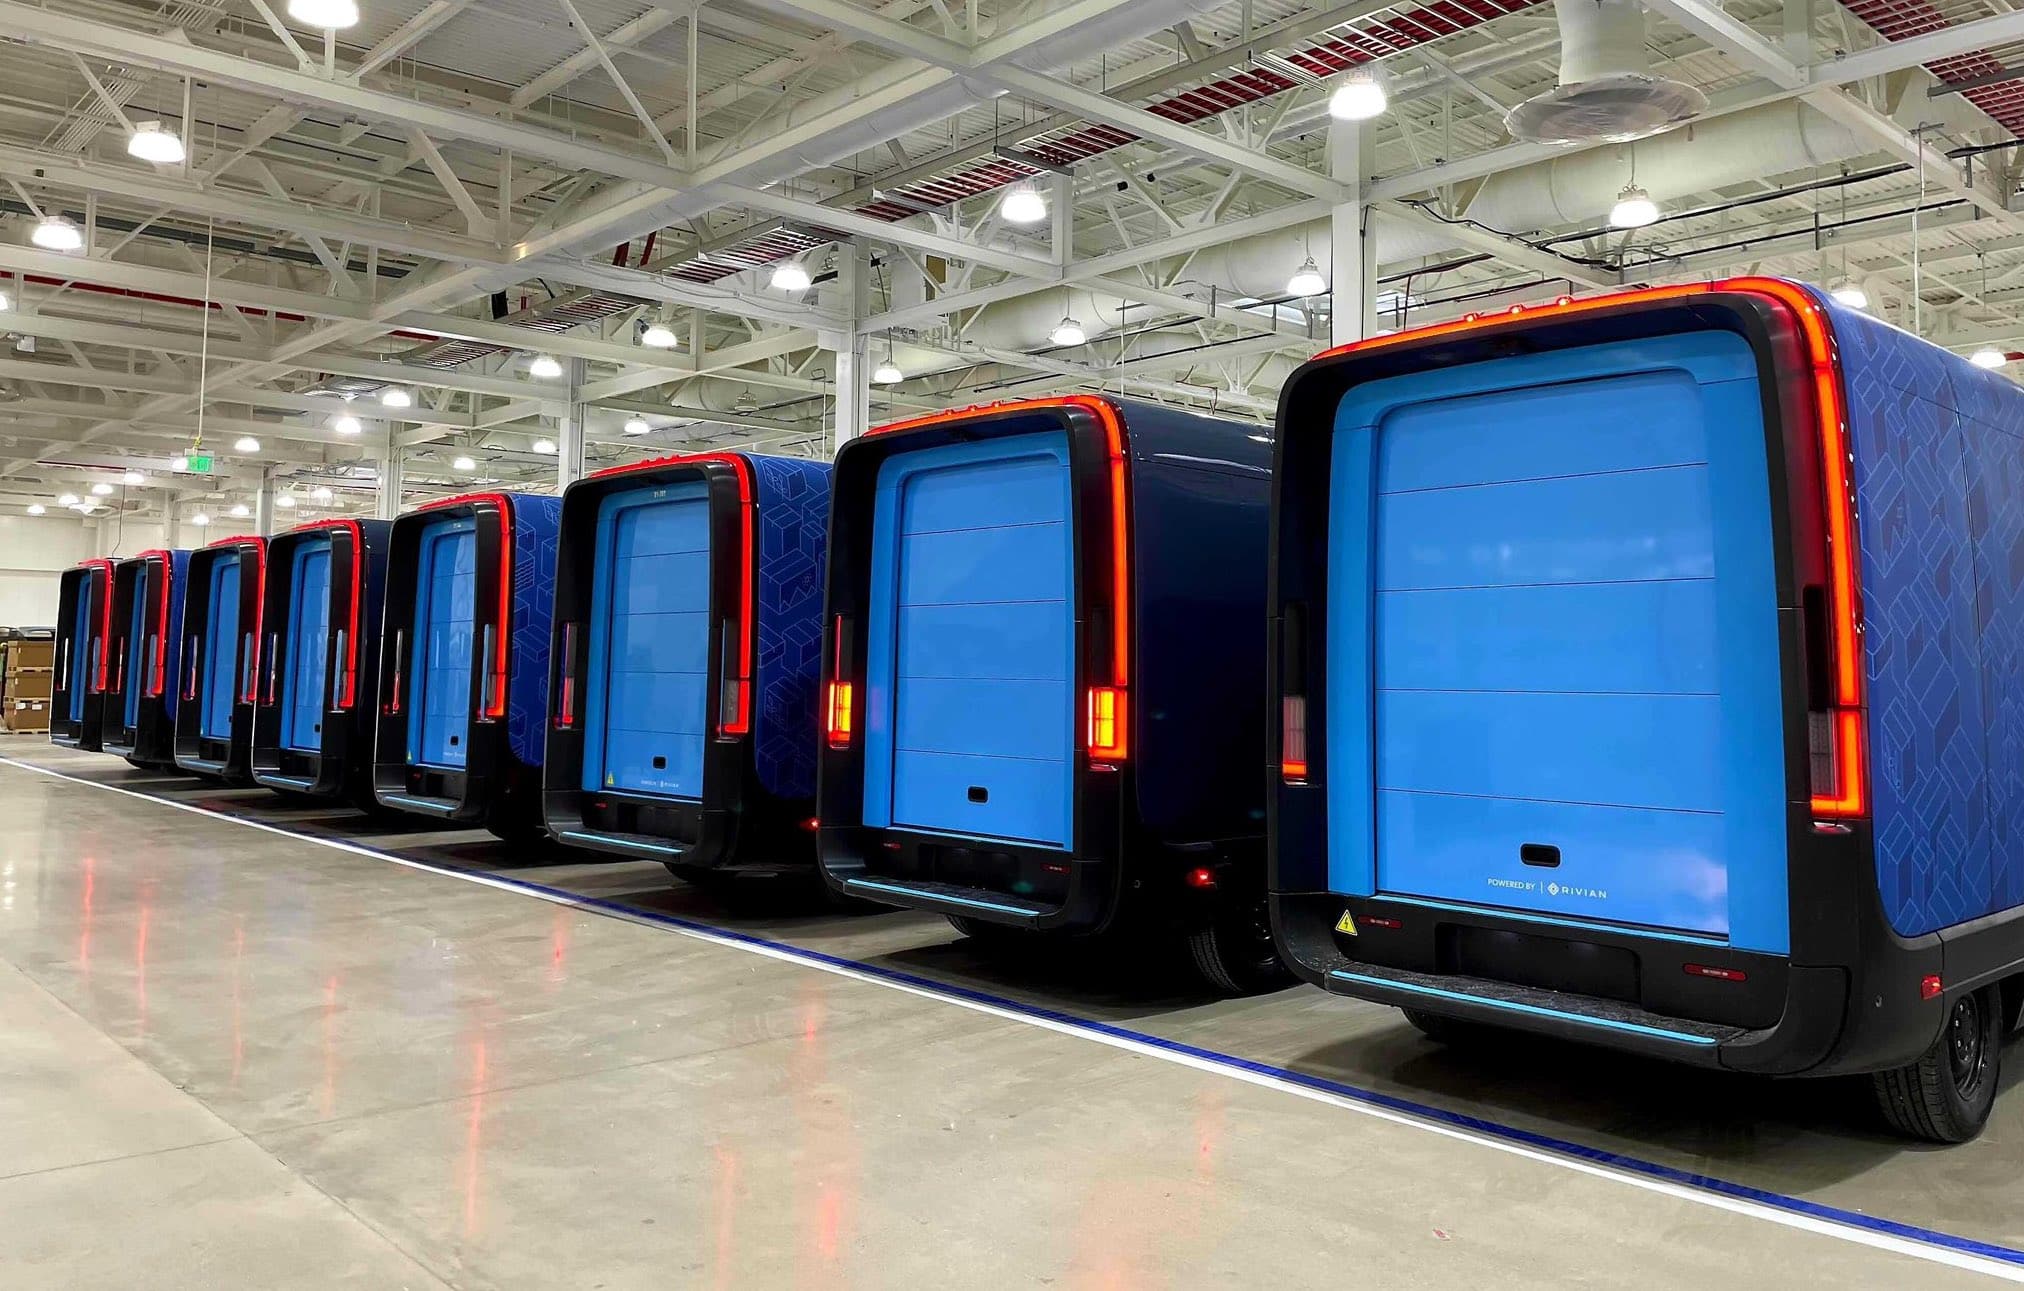 Rivian CEO shows off new fleet of Amazon delivery vans